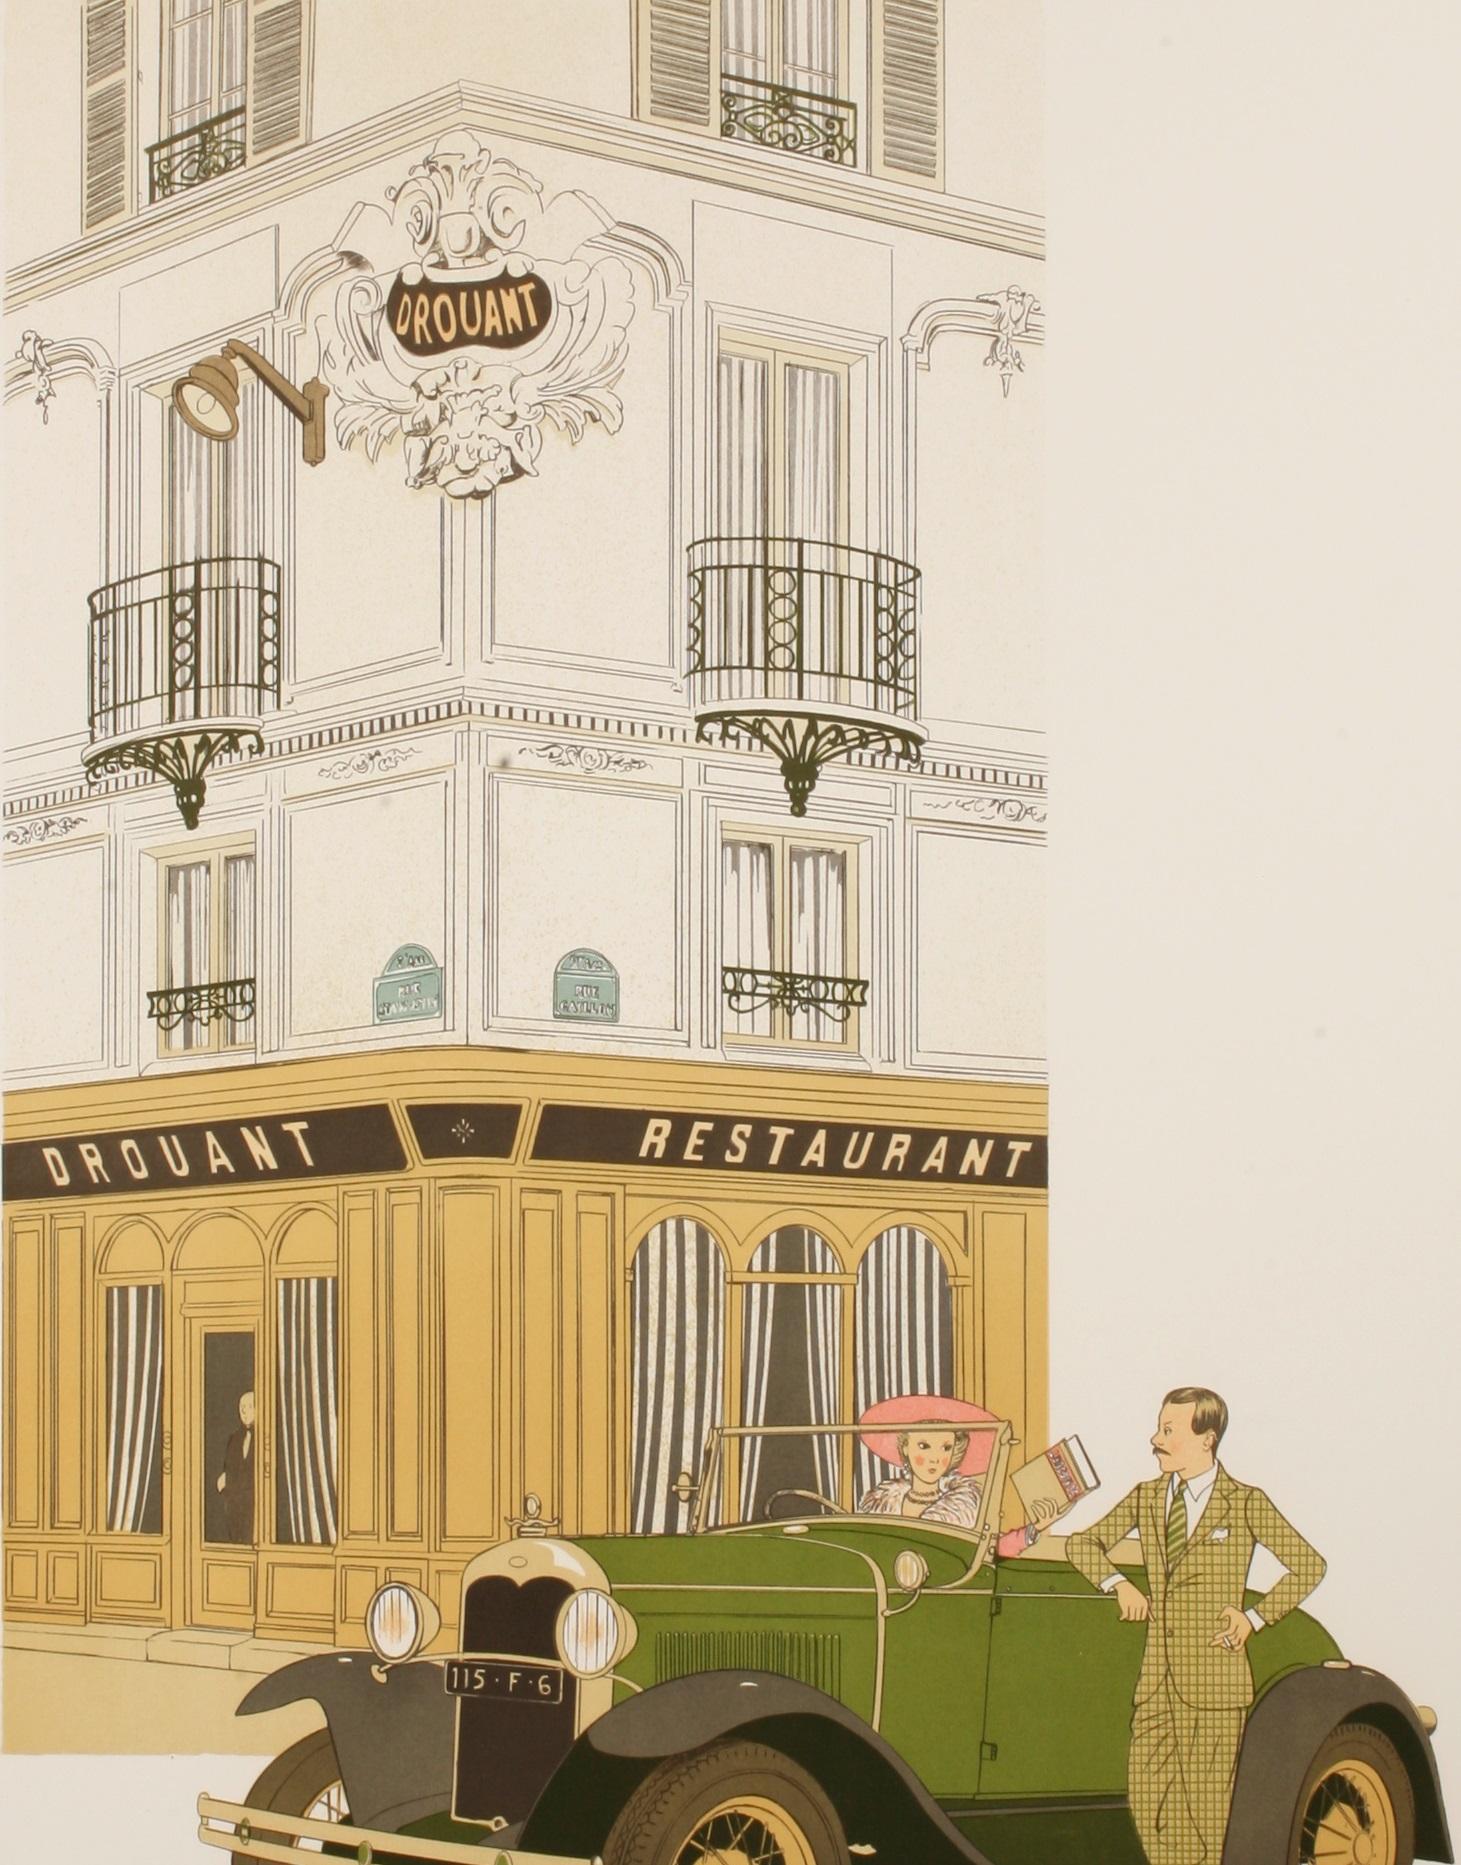 Original vintage poster-Walnut Denis-Paul-Drouant-Restaurant-Paris, 1979

Additional details:
Materials and Techniques: Colour lithograph on paper
Features: Signed
Style: Art Deco
Subject: Travel
Original/Licensed Reprint: Original
Type: